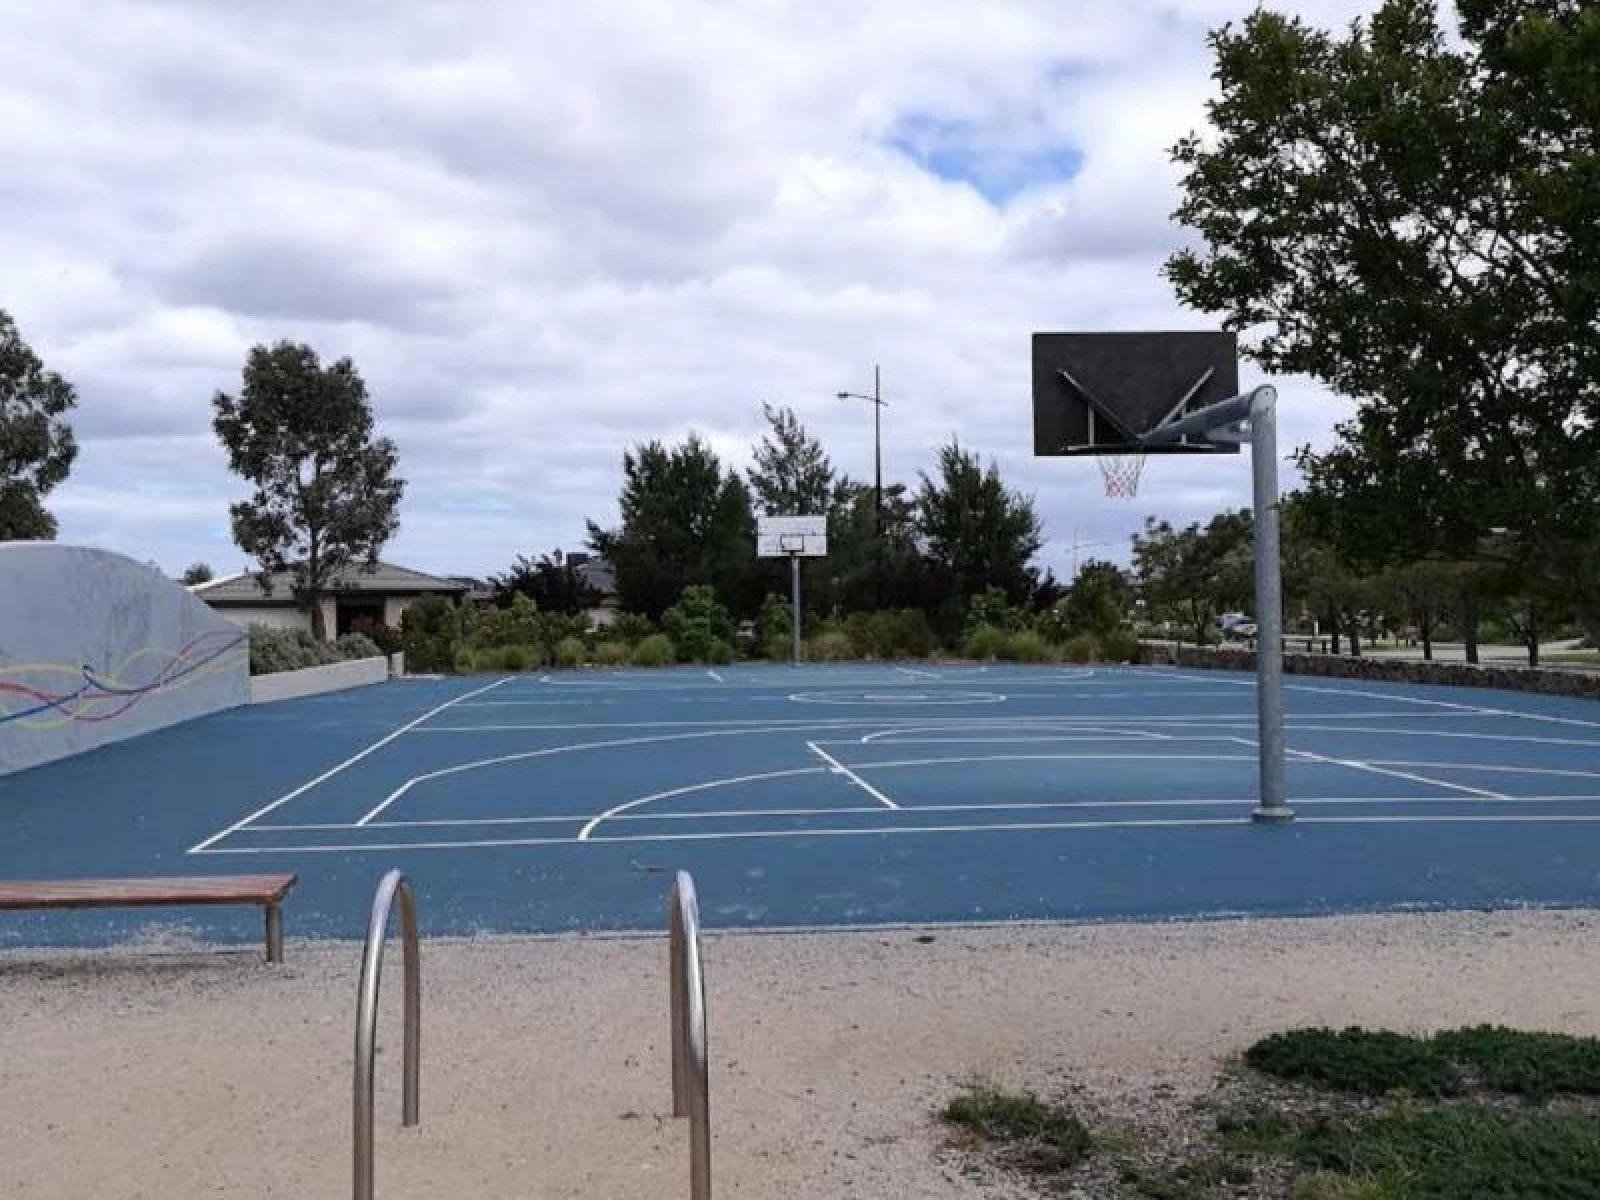 Williams Landing Basketball Court: Delaney Boulevard Park Courts of